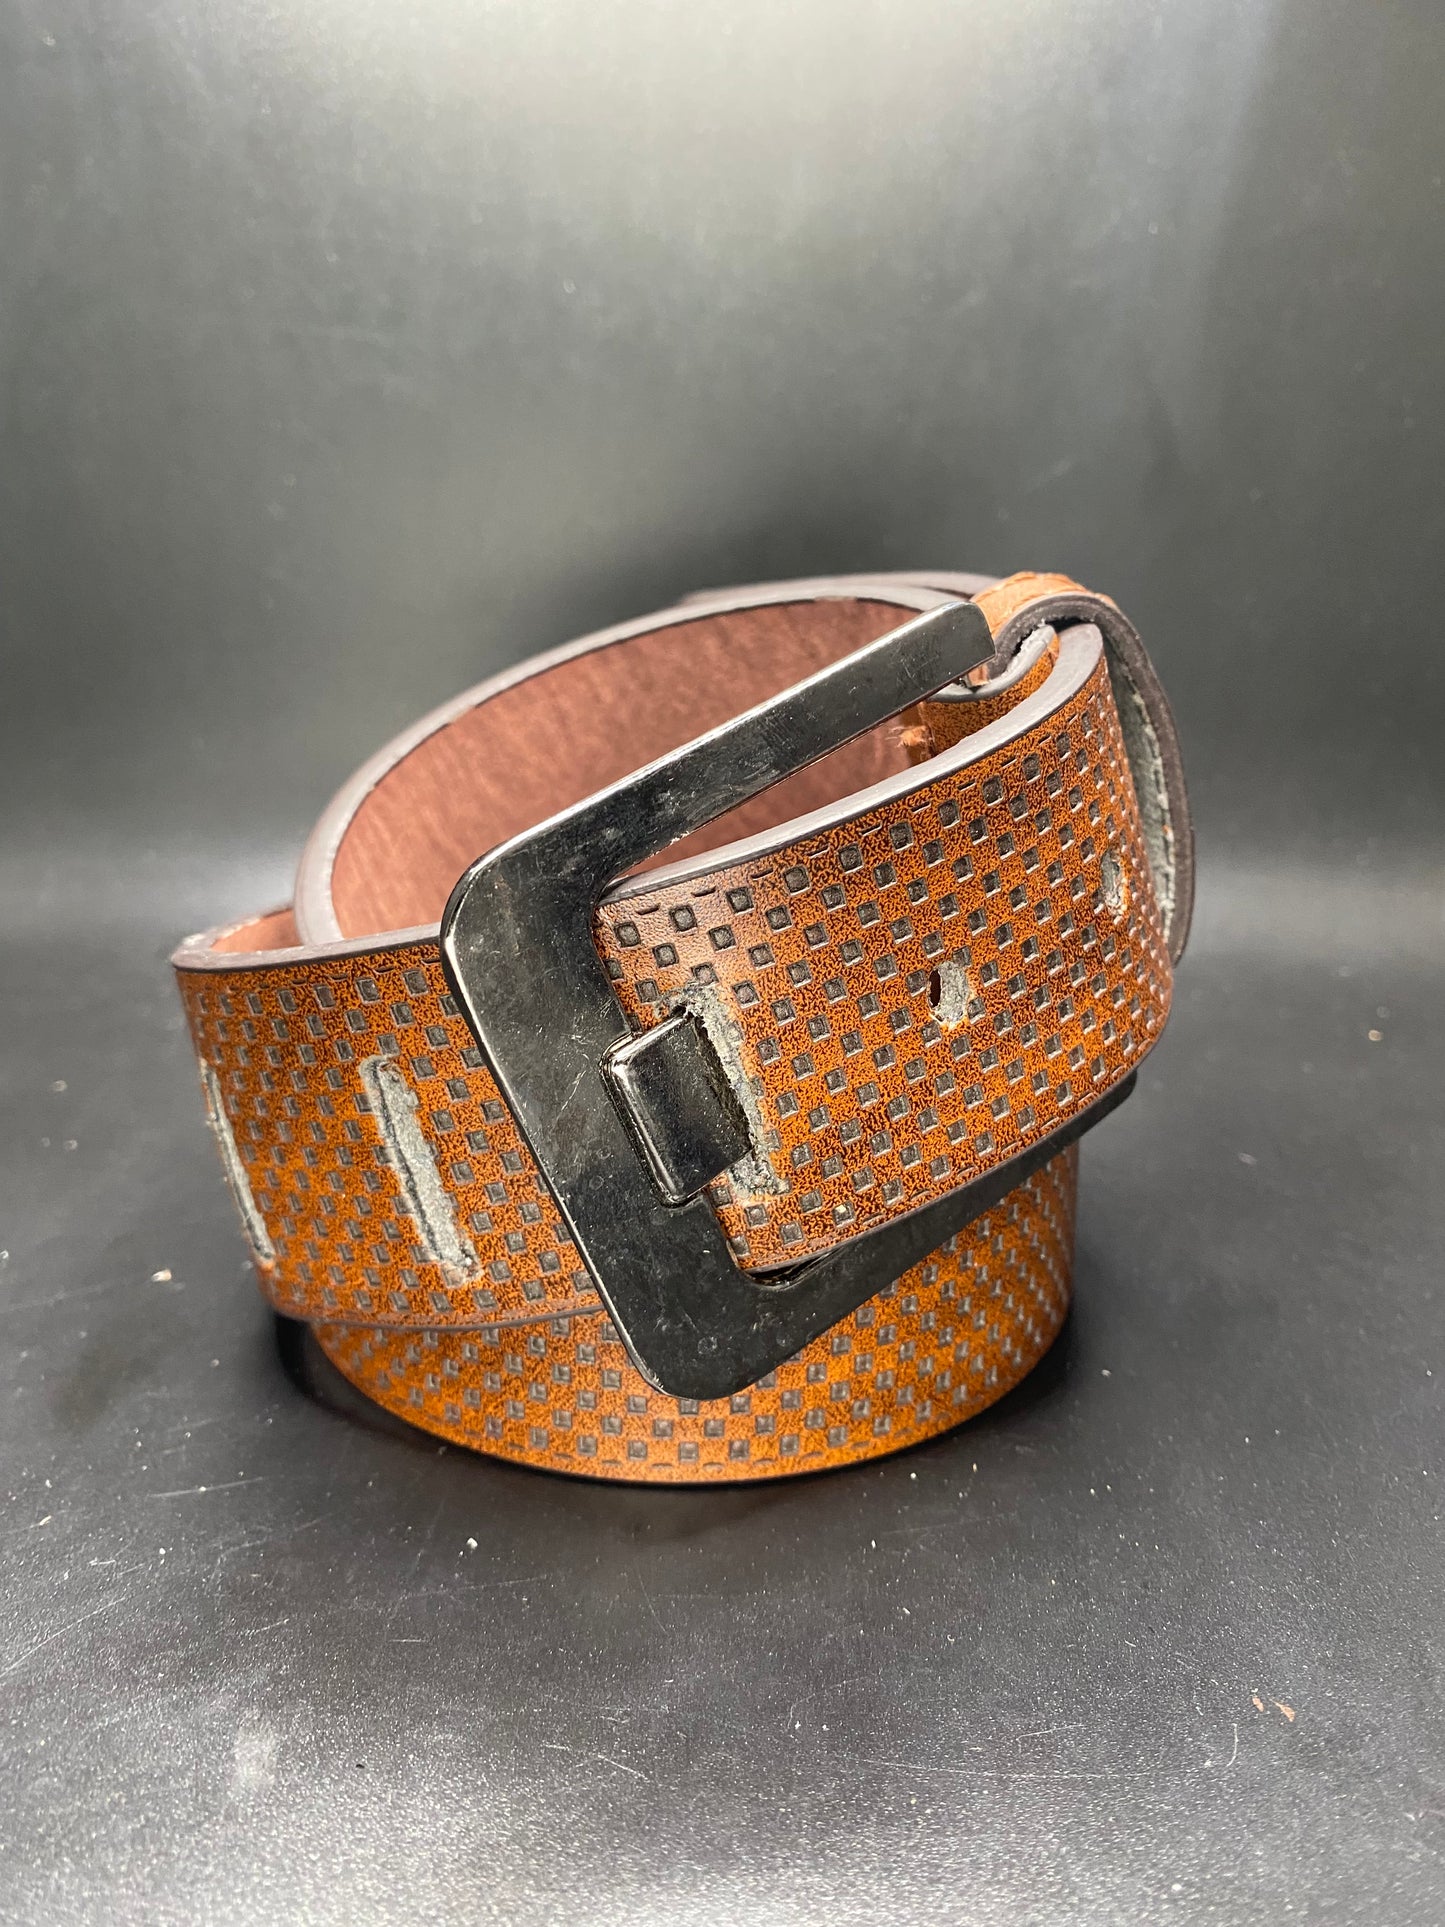 Normal belt fashion 4.5cm